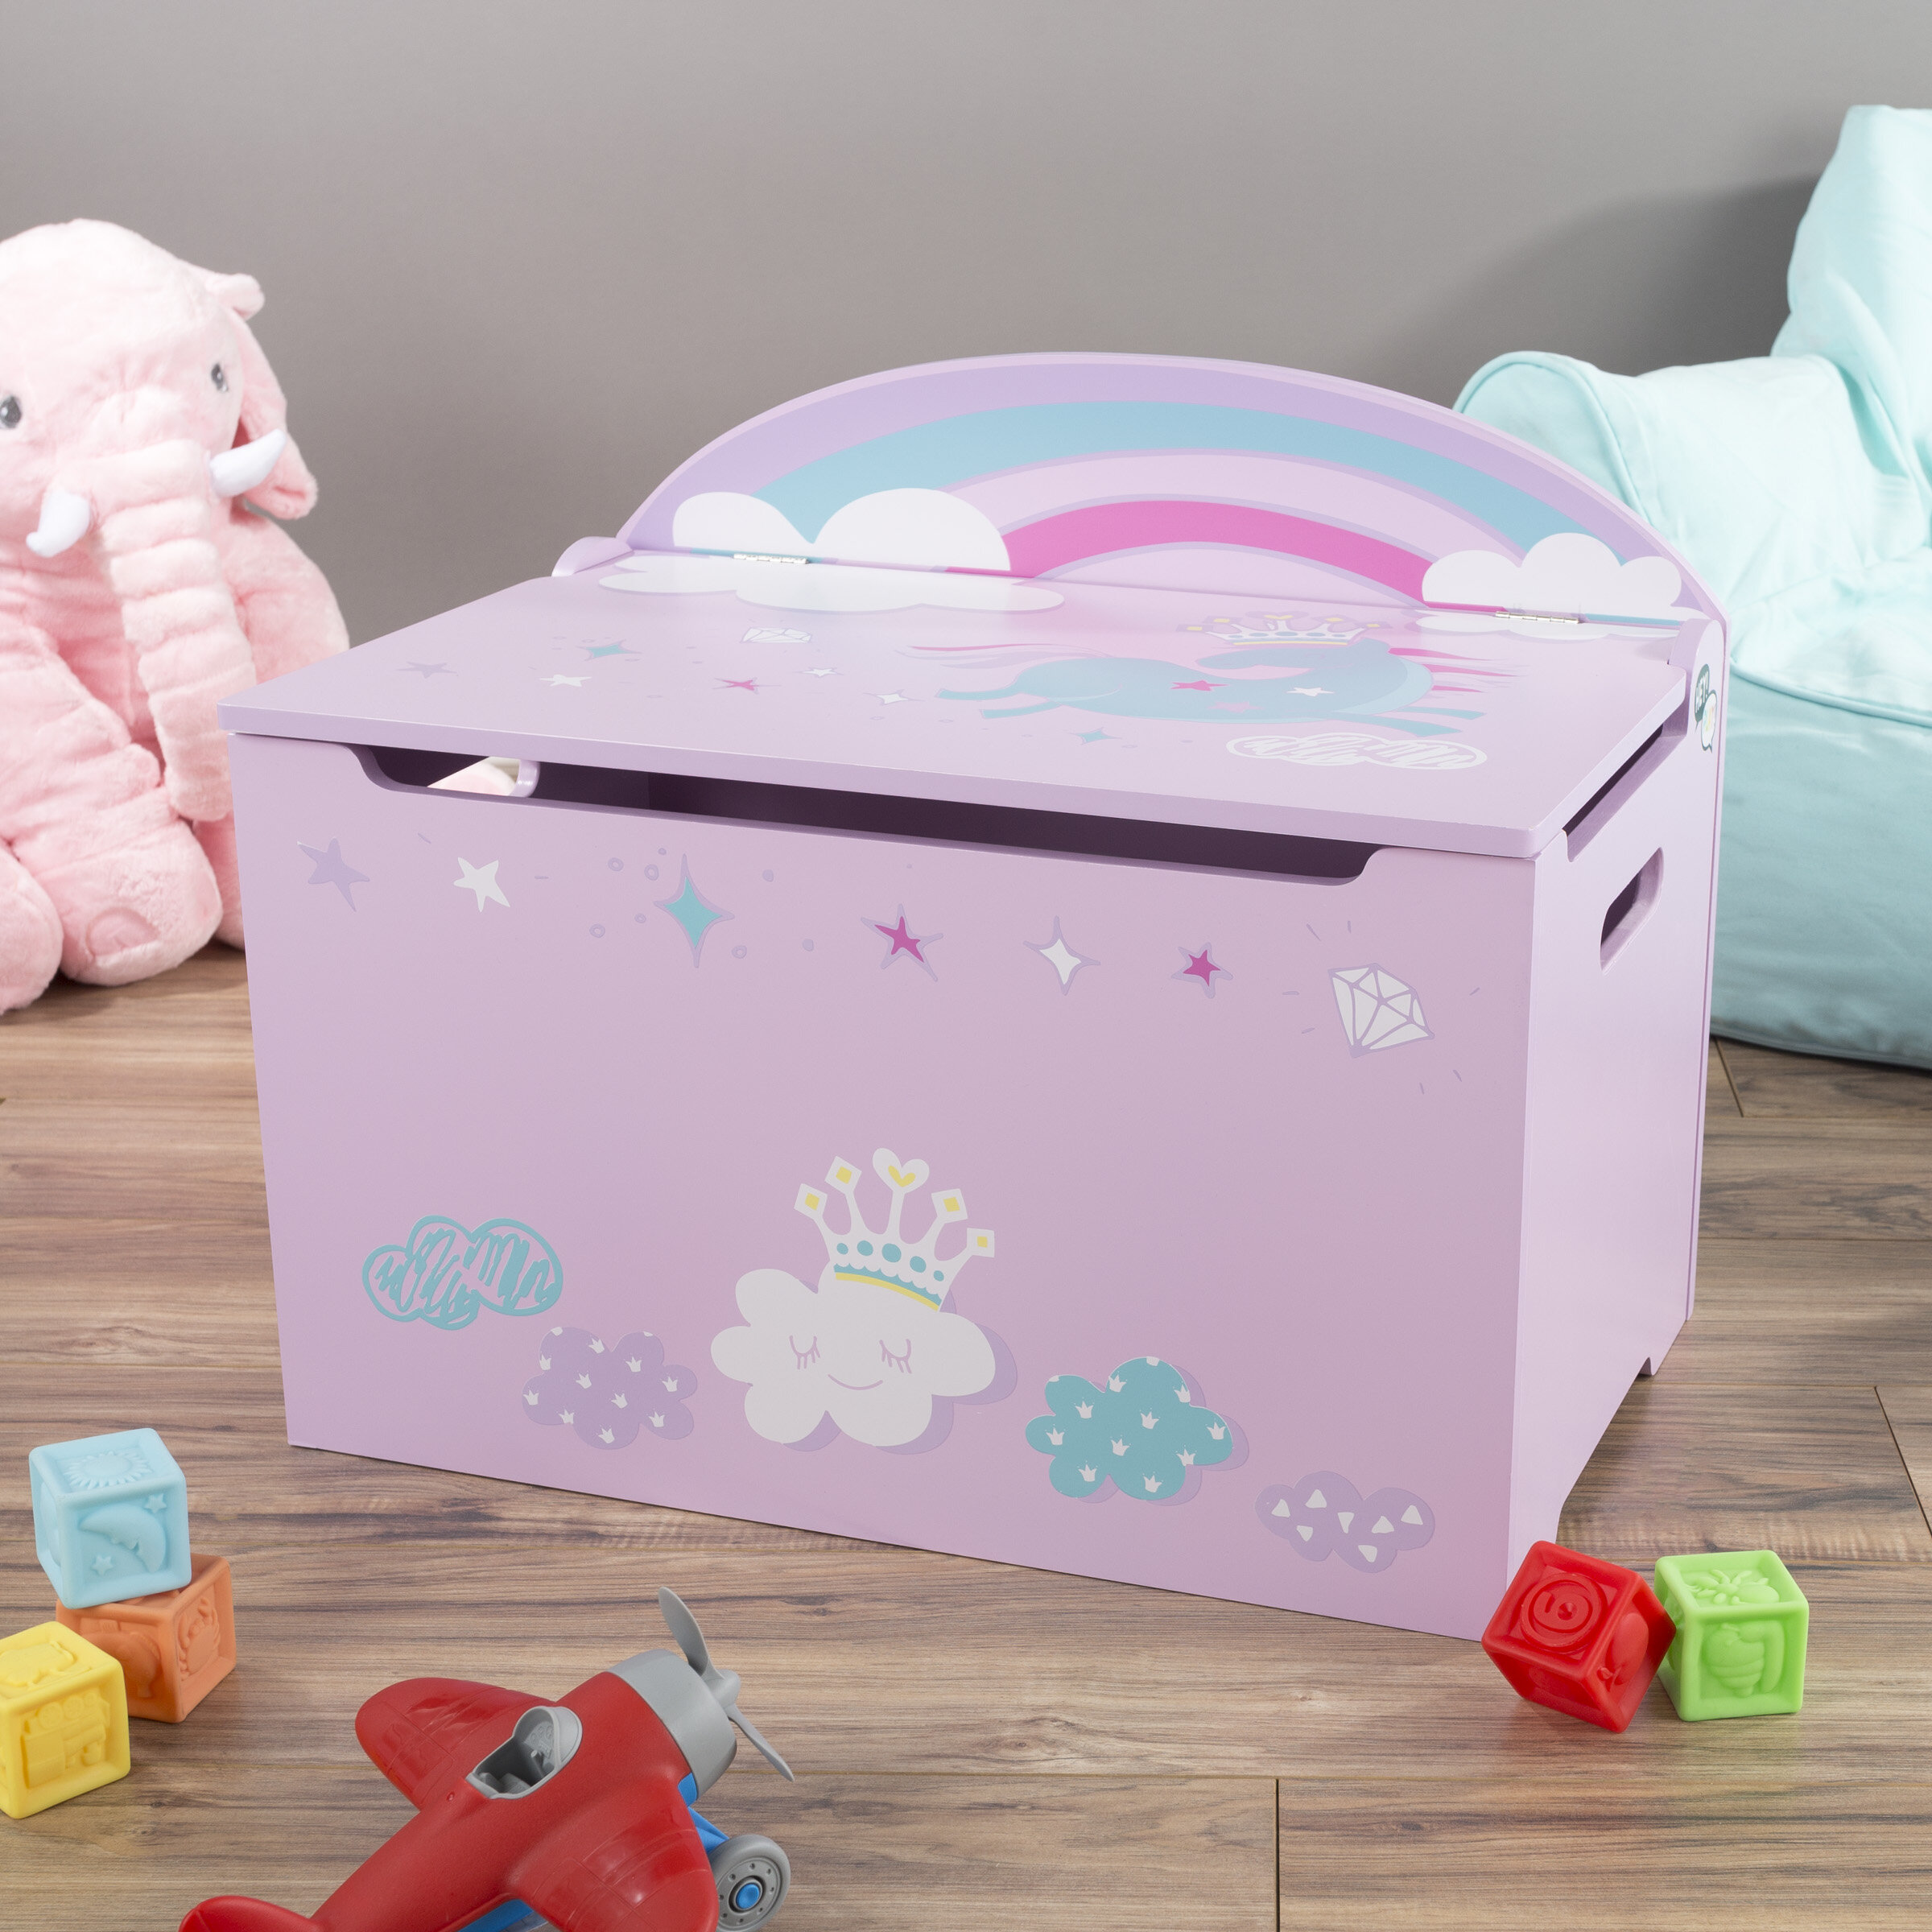 Disney Frozen Toy Box toy Chest storage box for toys books clothes 